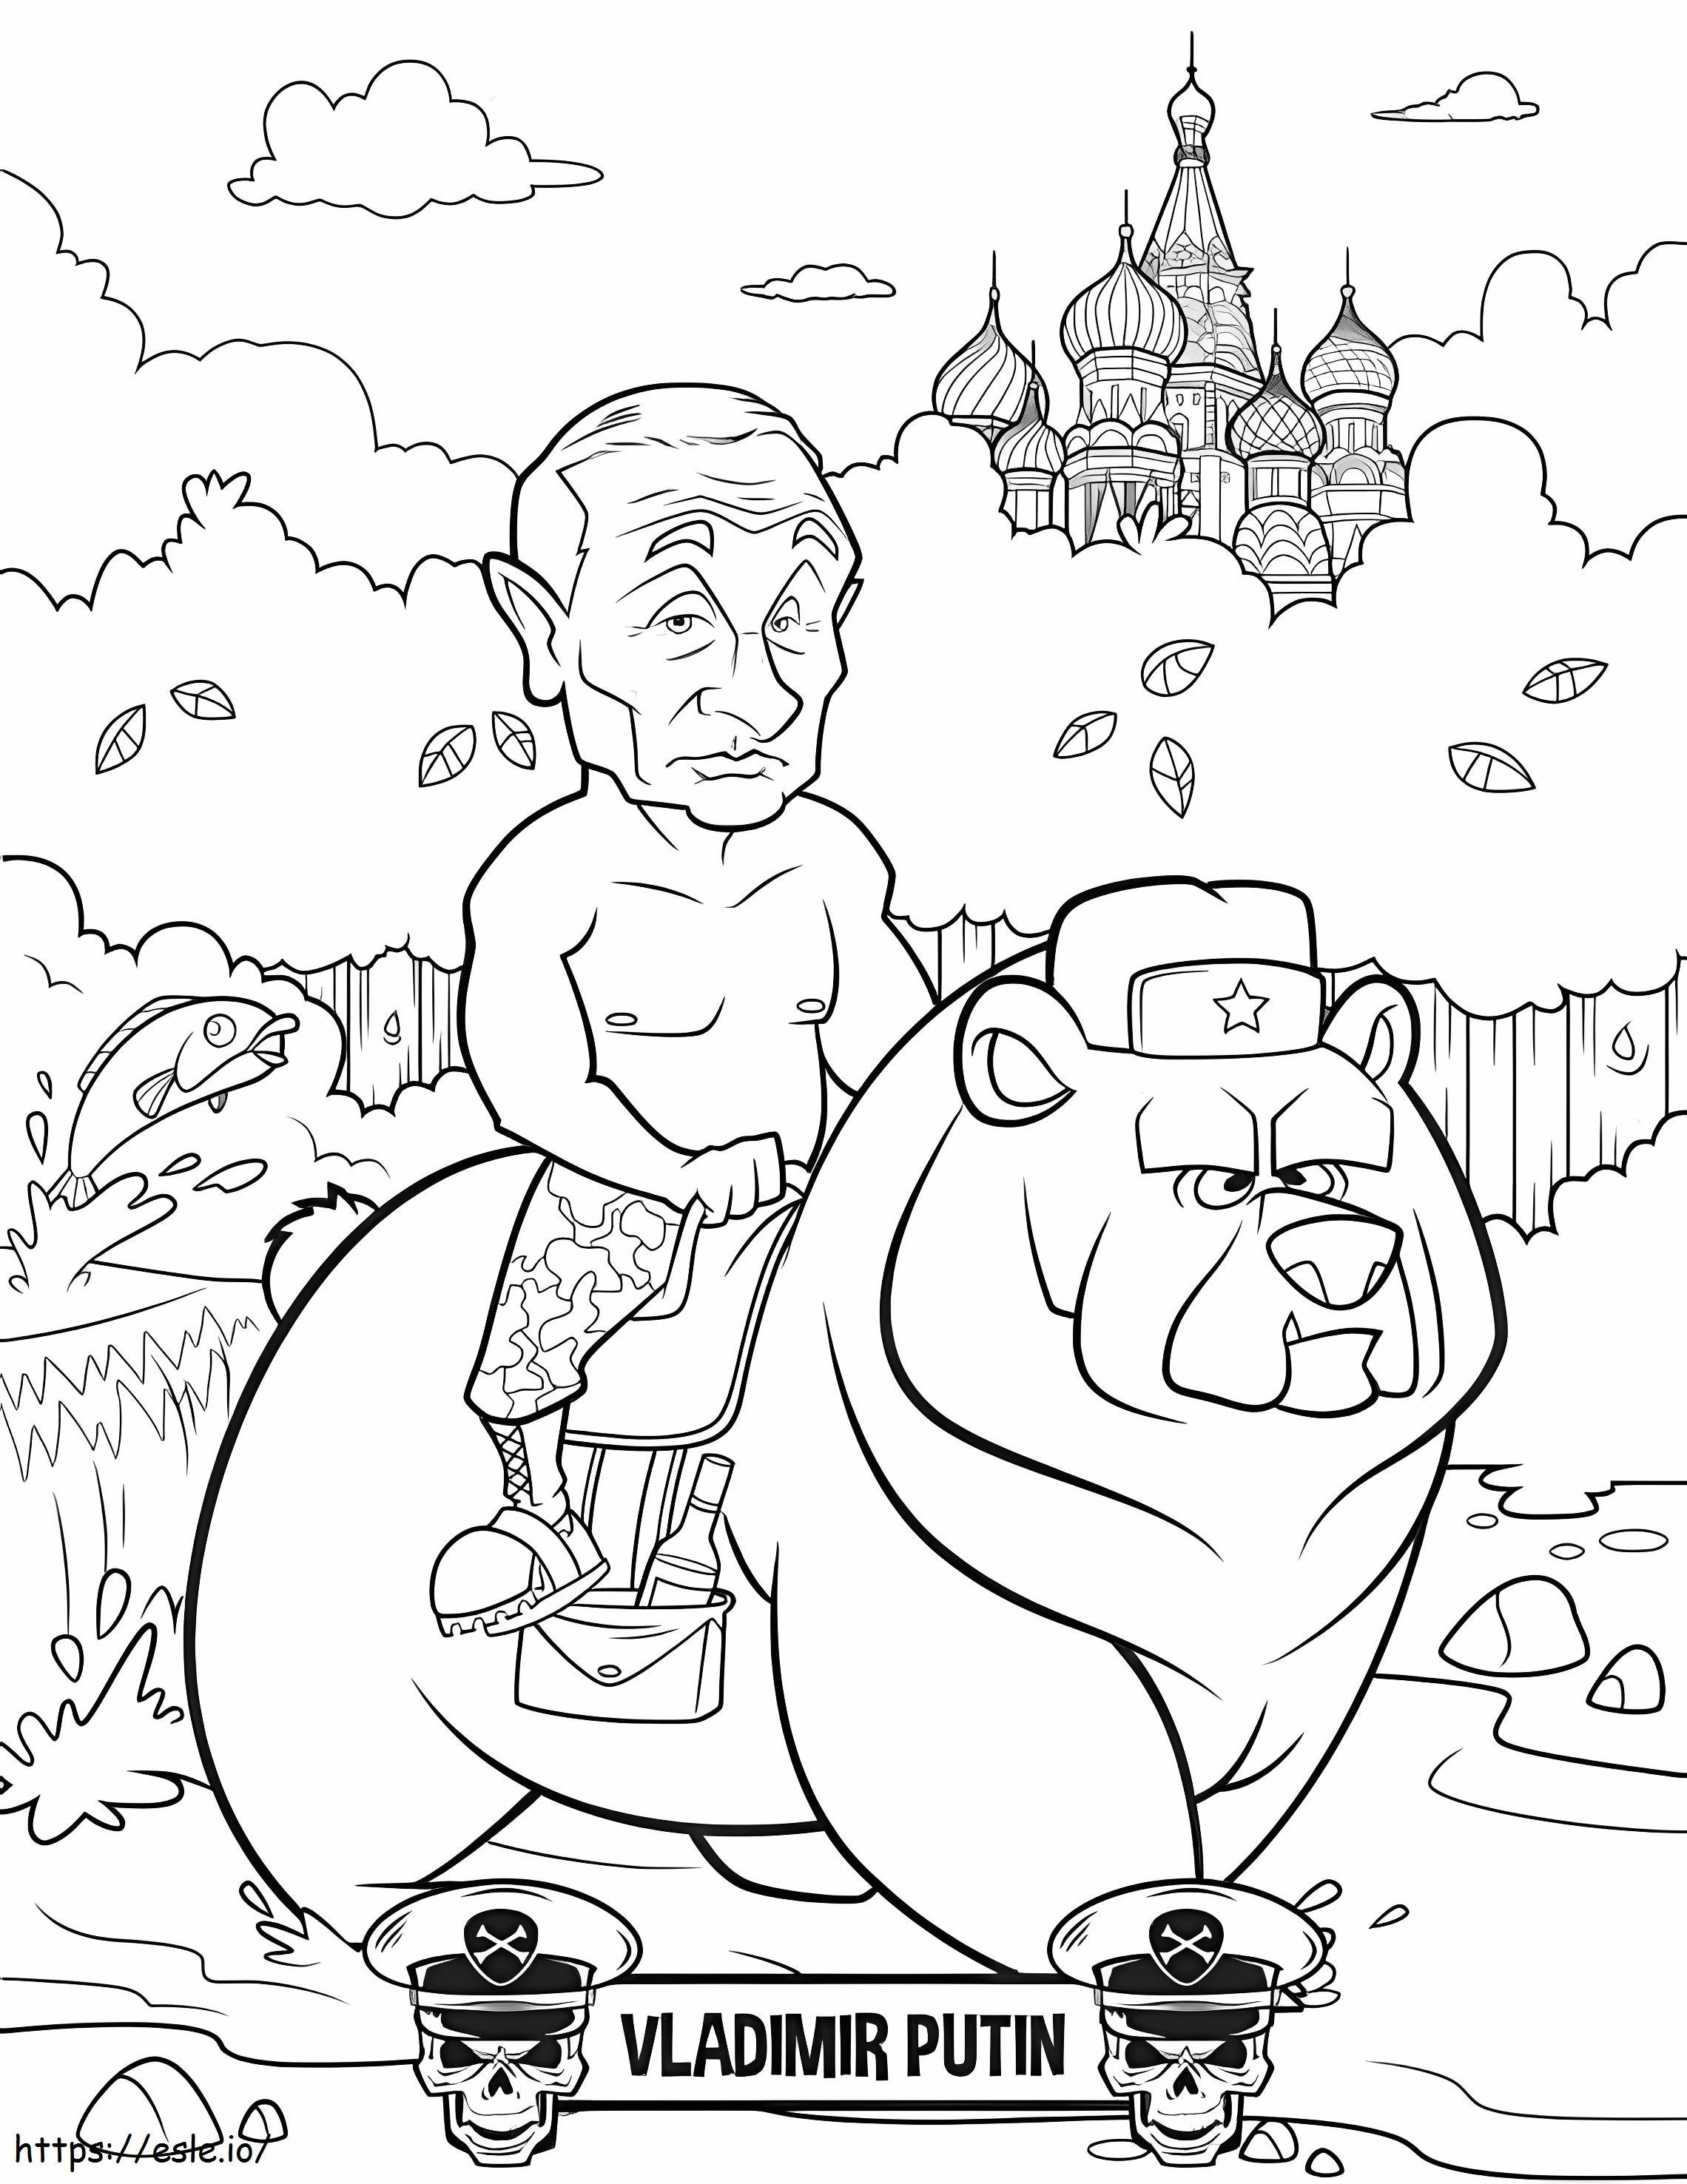 Komik Vladimir Putin boyama